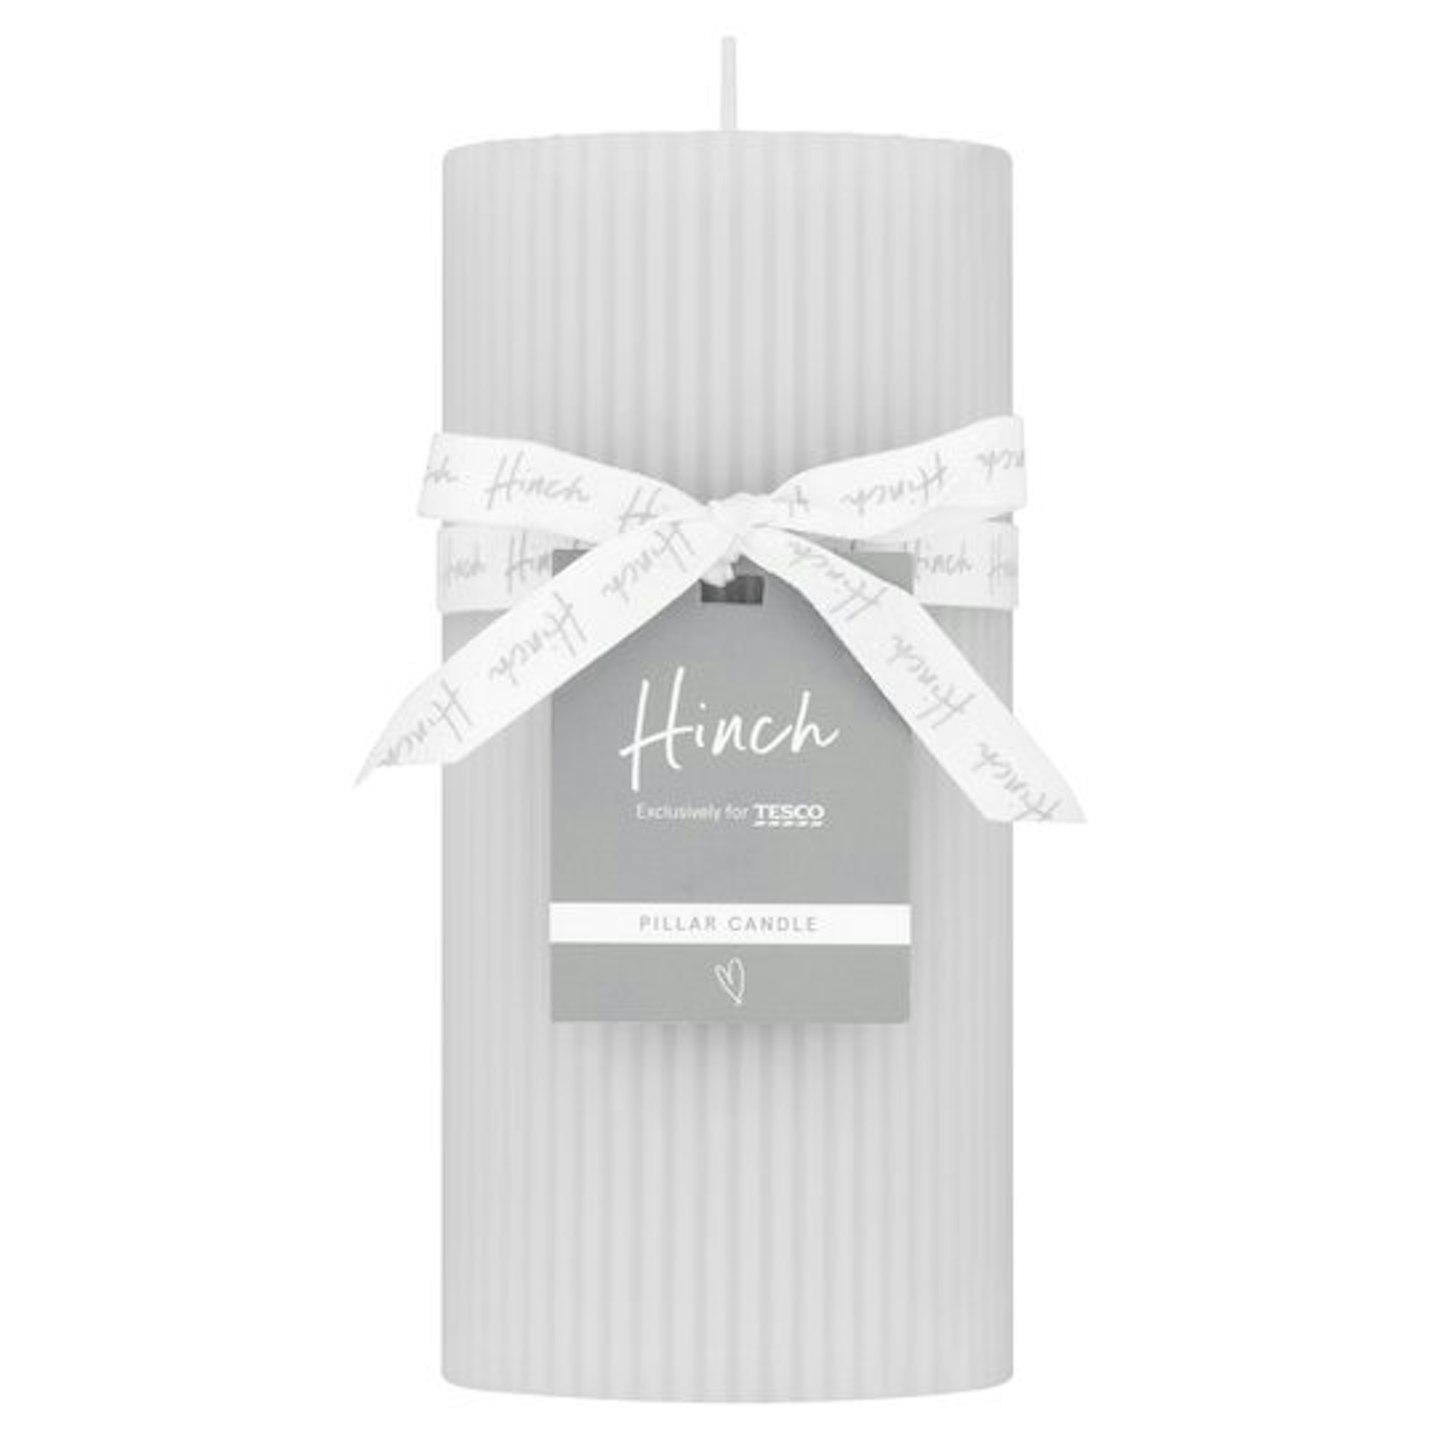 Tesco x Mrs Hinch, Small Grey Pillar Candle, £3